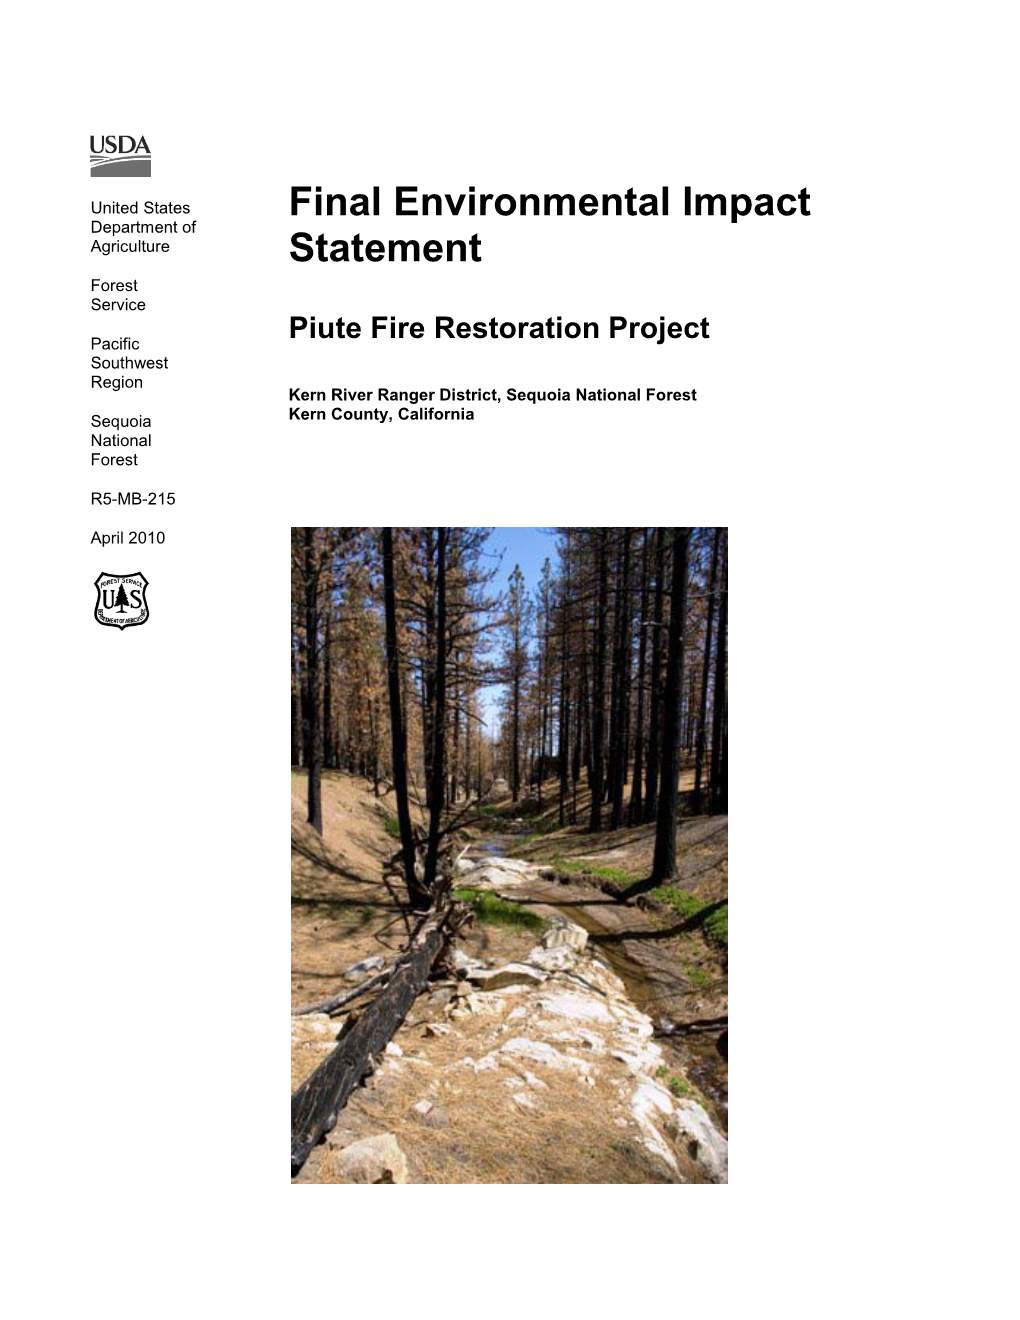 Environmental Impact Statement: Piute Fire Restoration Project